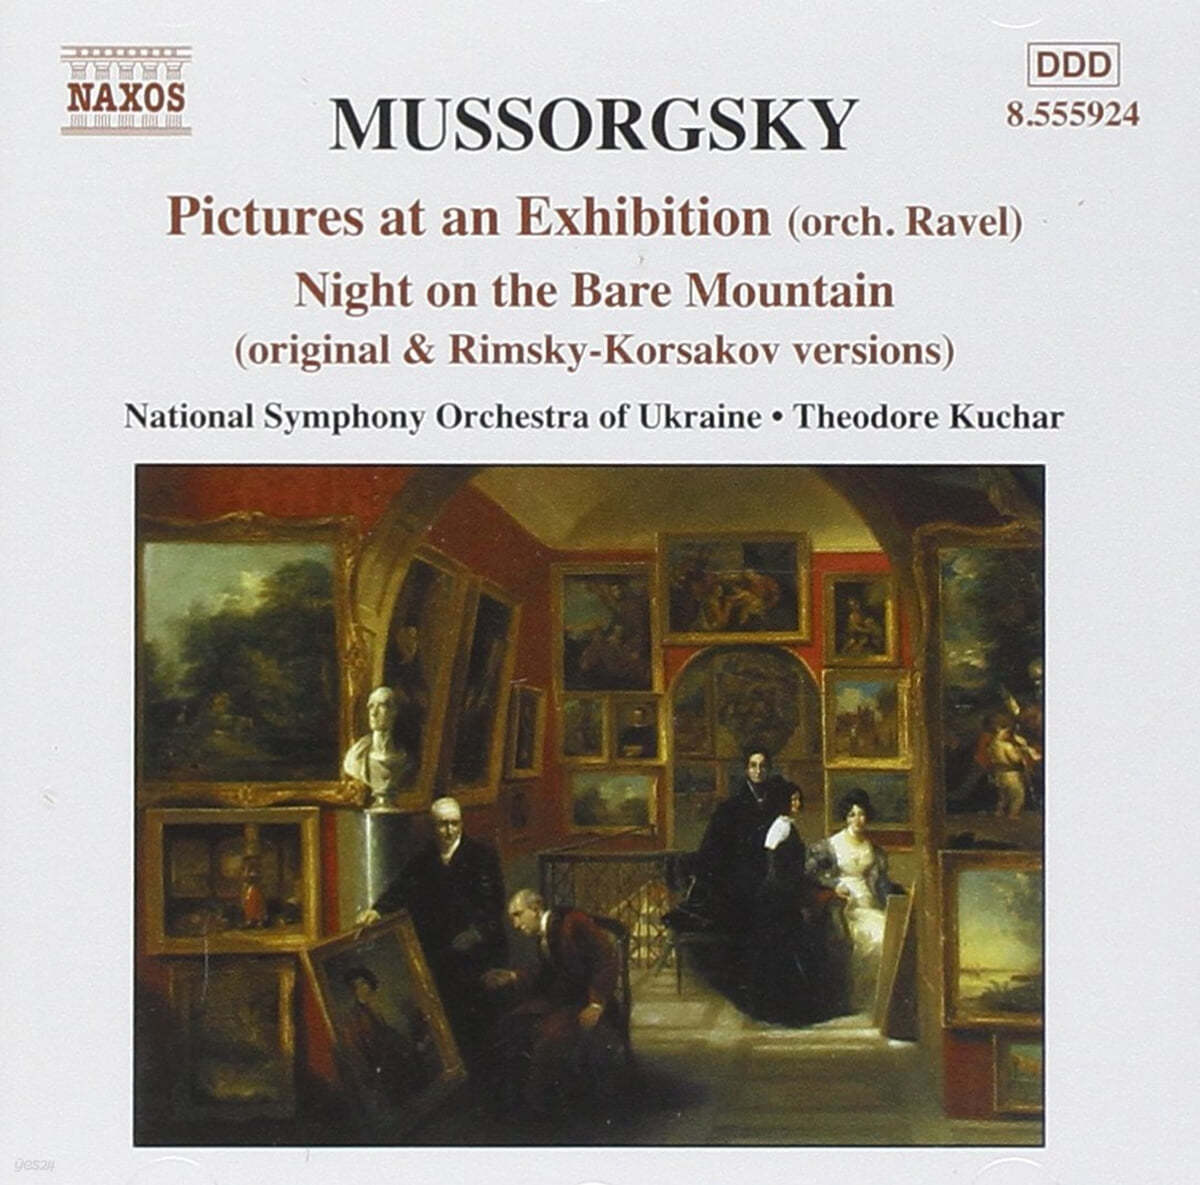 Theodor Kuchar 무소르그스키: 전람회의 그림 (Mussorgsky : Pictures at an Exhibition) 